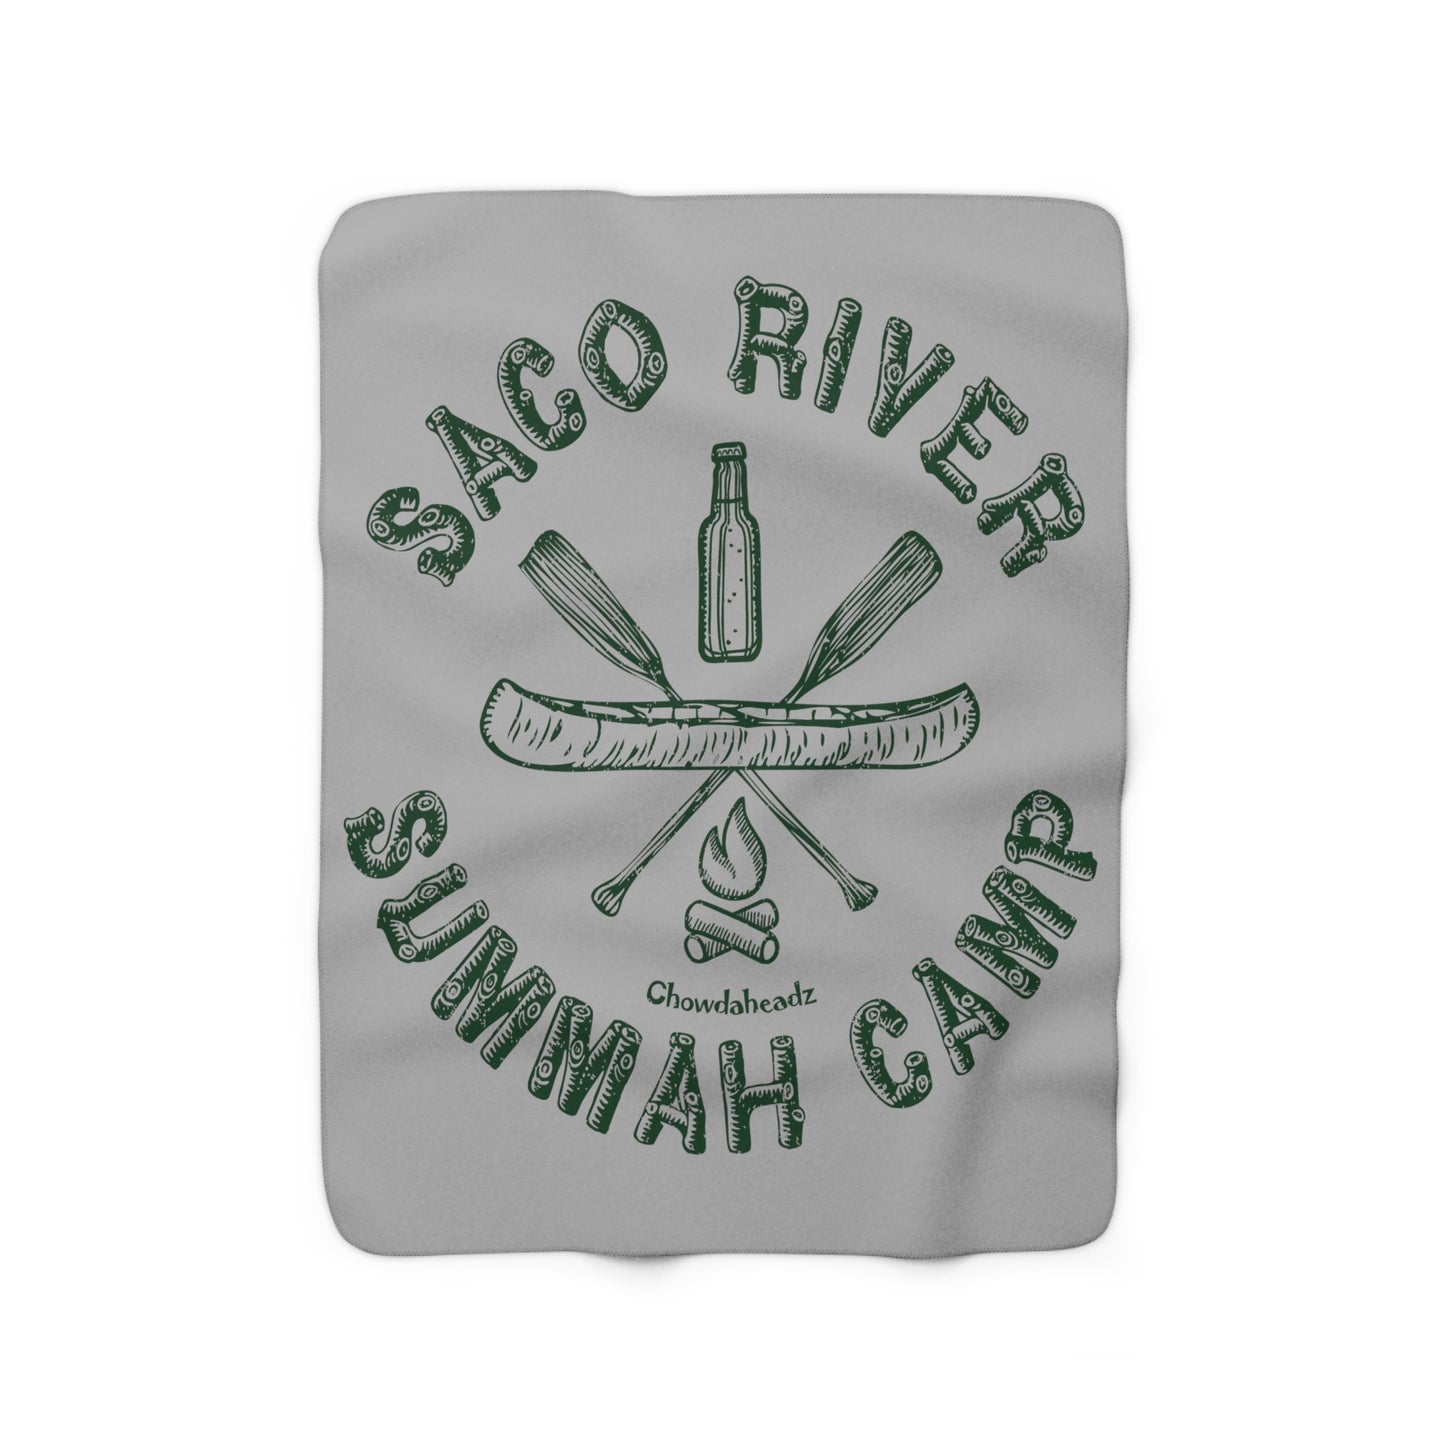 Saco River Summer Camp Sherpa Fleece Blanket - Chowdaheadz